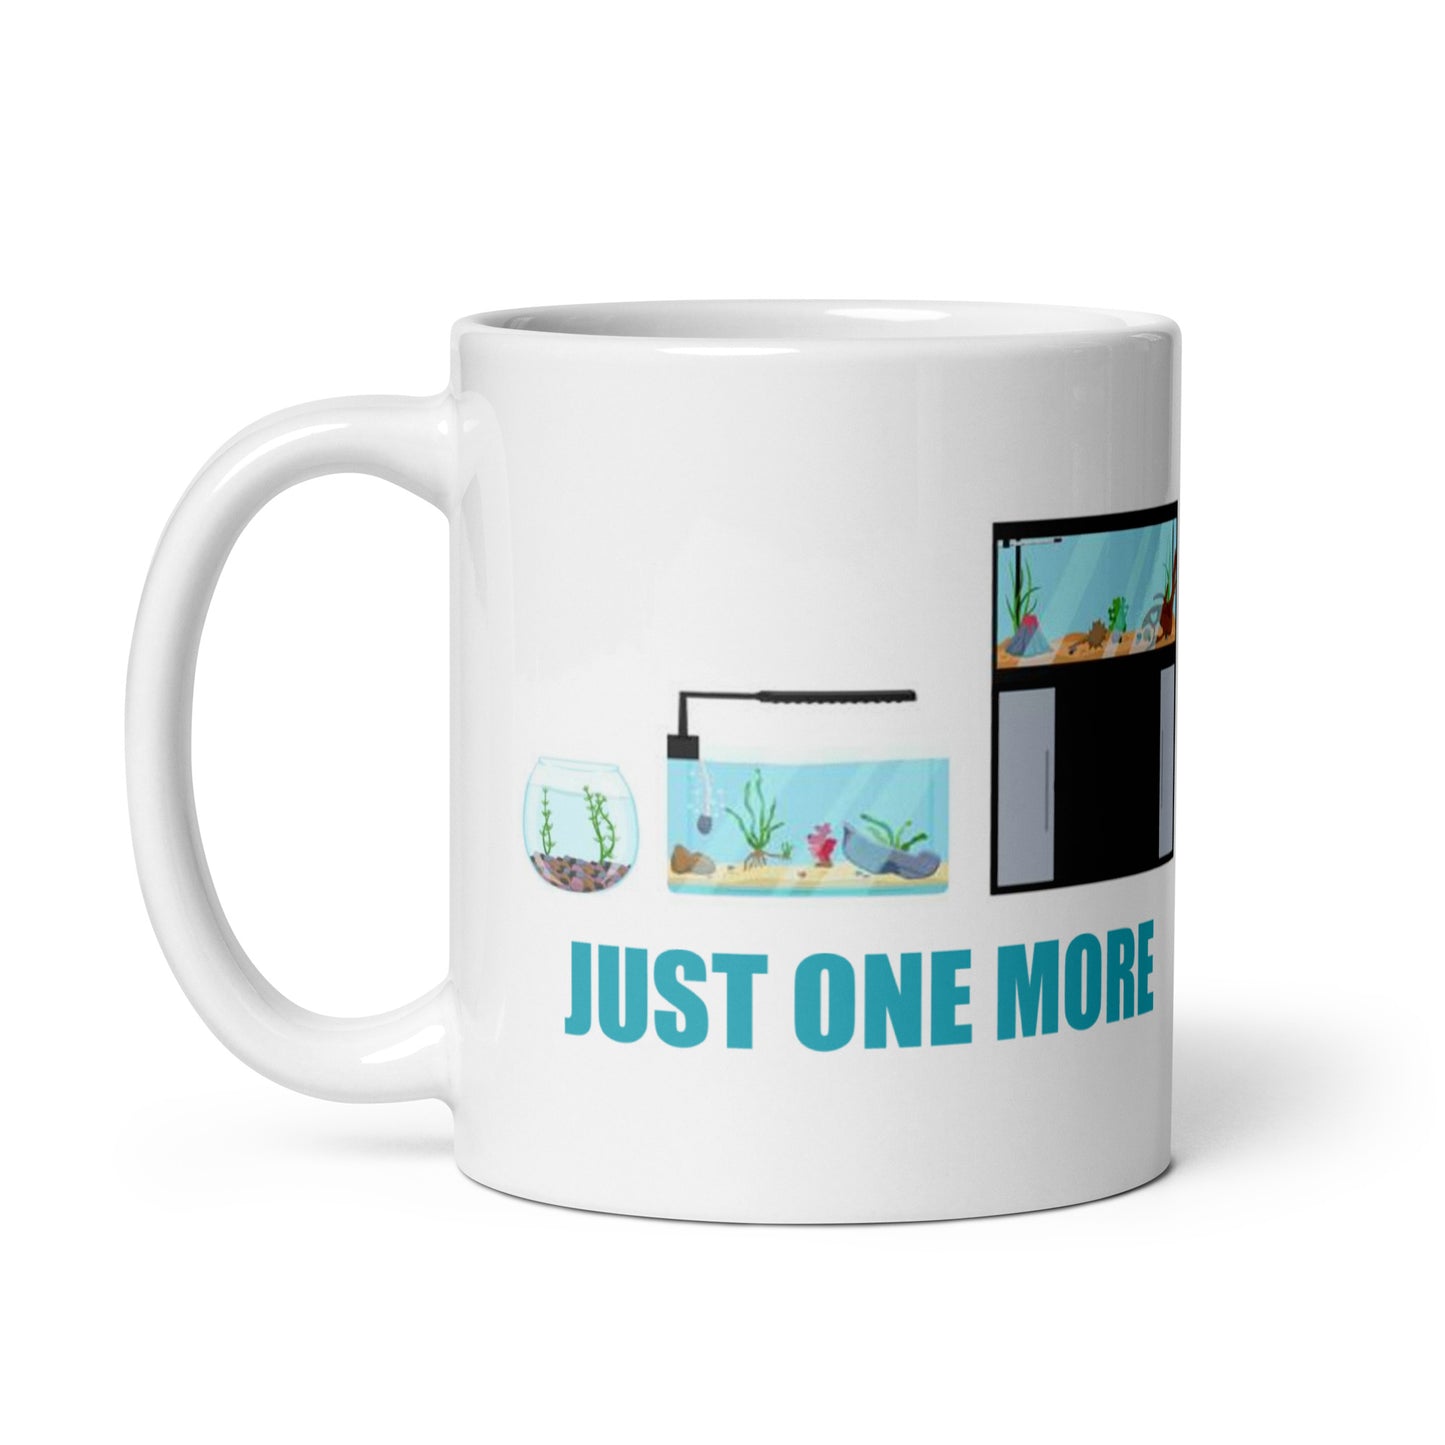 Just one more TANK mug!